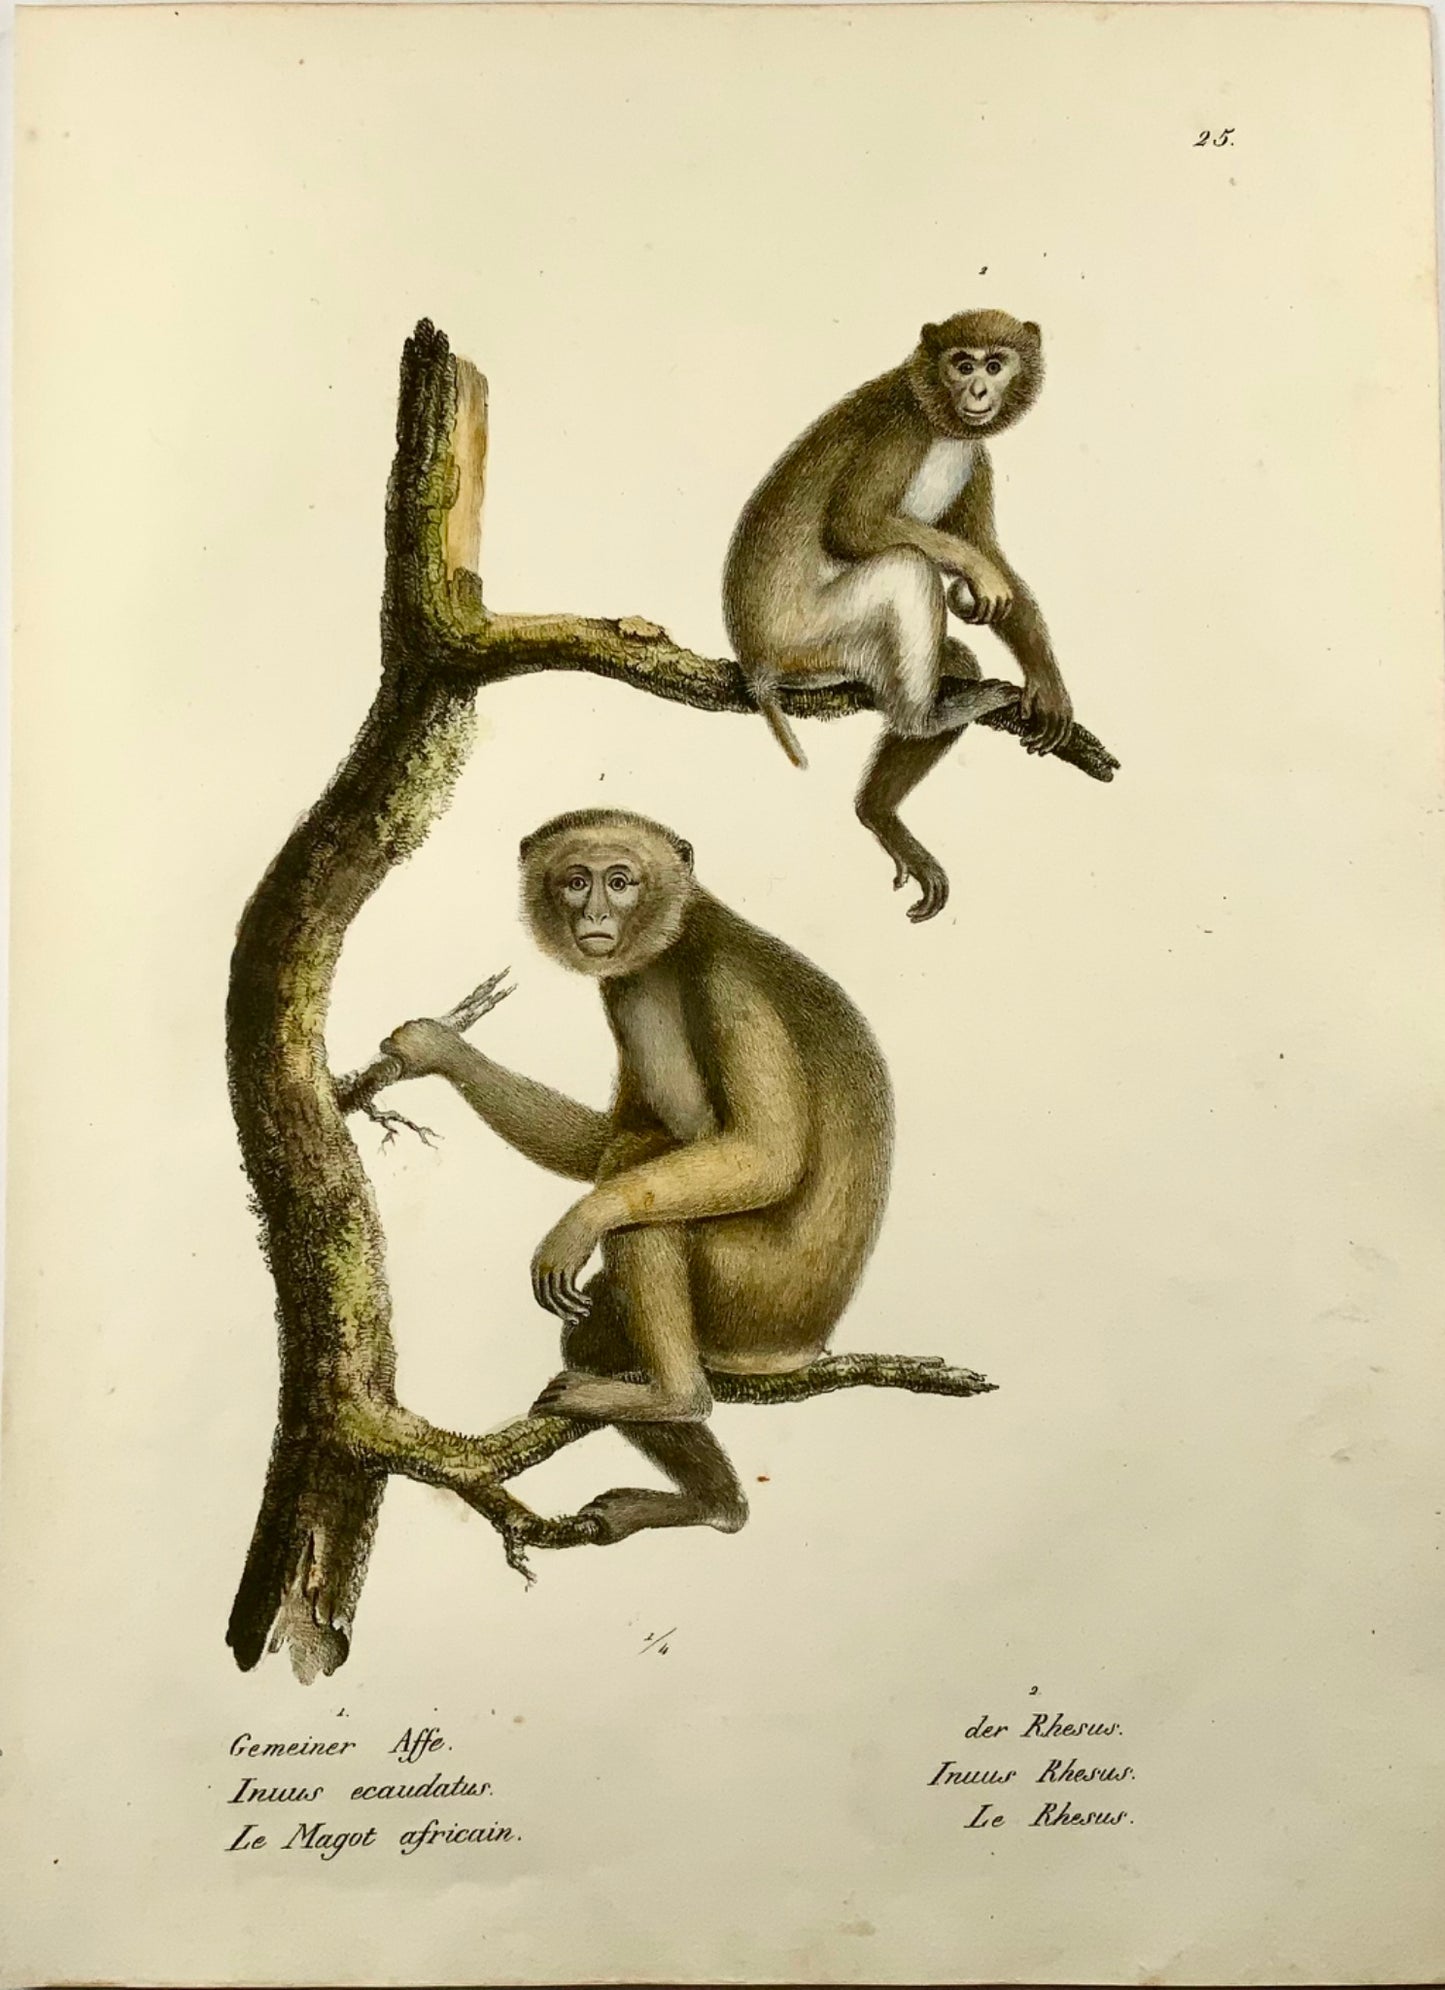 1824 Common Apes, Mammals, K.J. Brodtmann hand colored folio lithograph